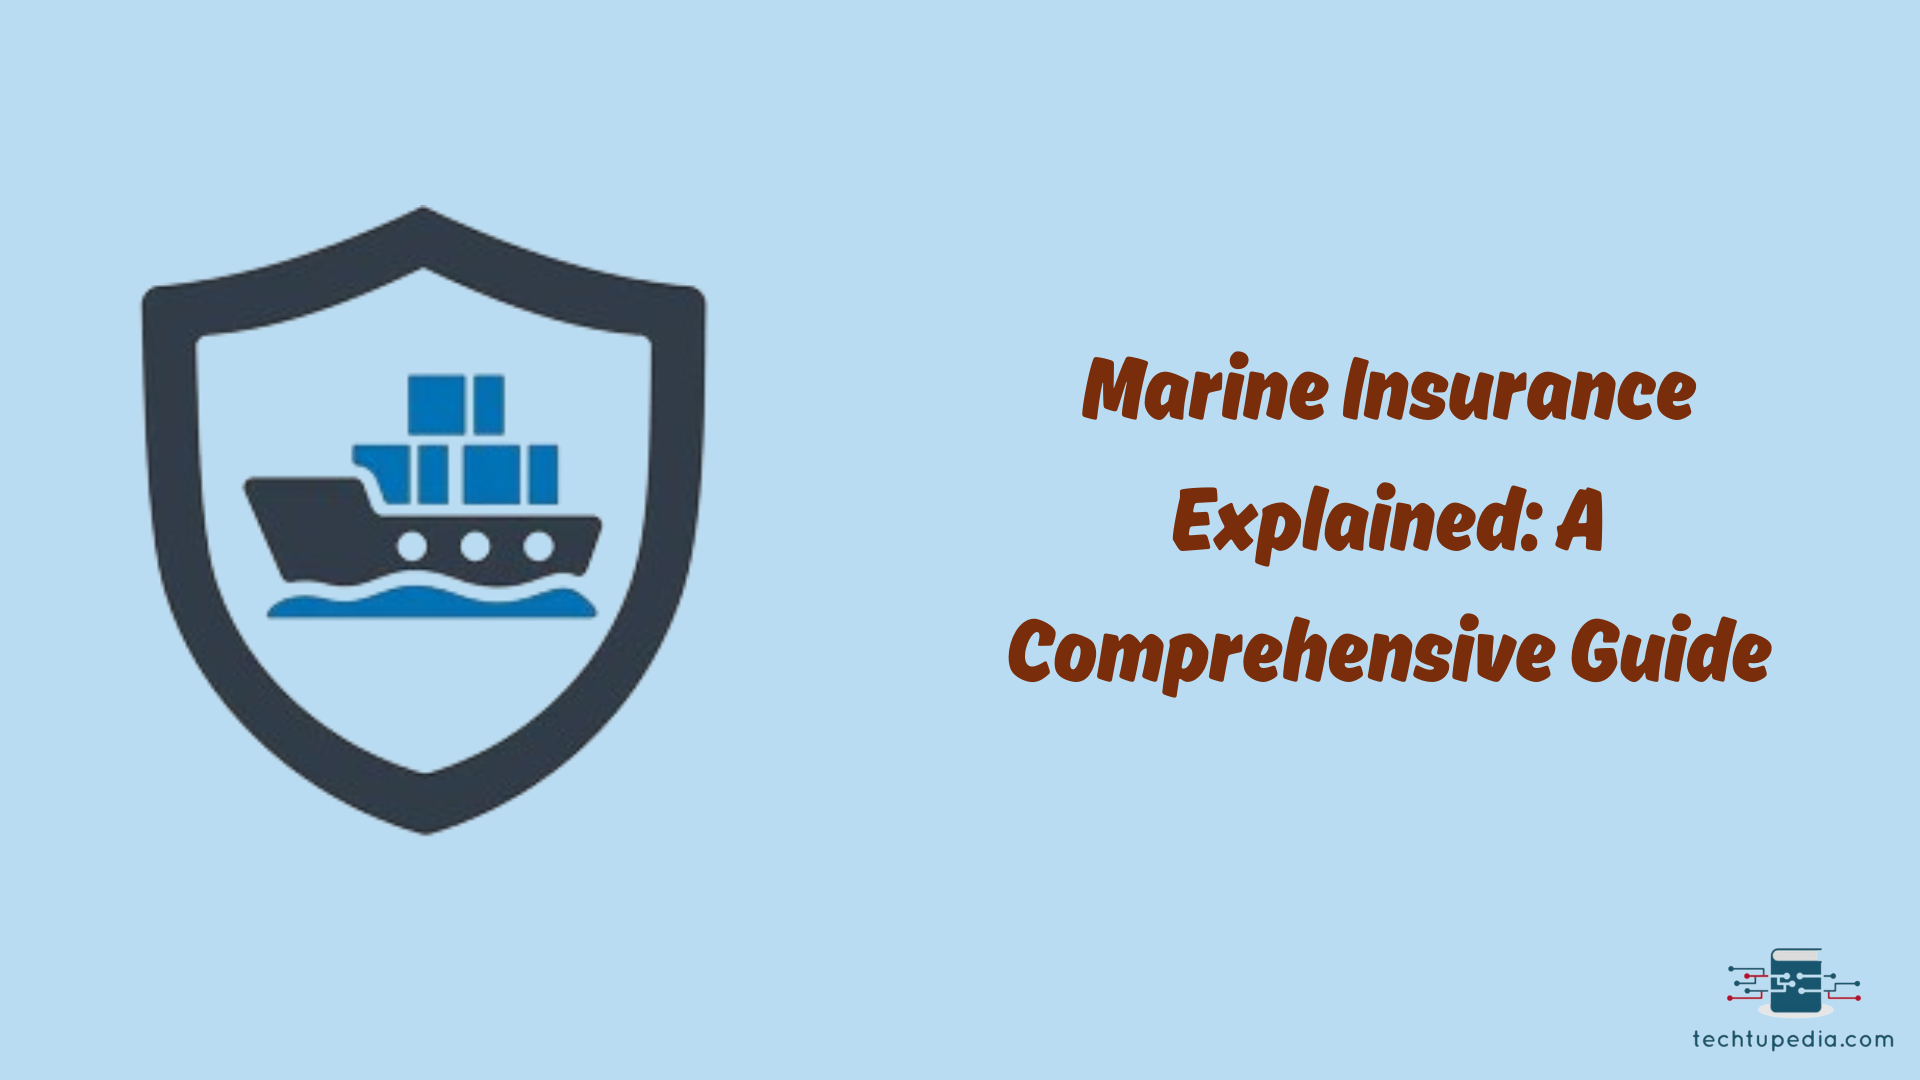 Marine Insurance Explained: A Comprehensive Guide